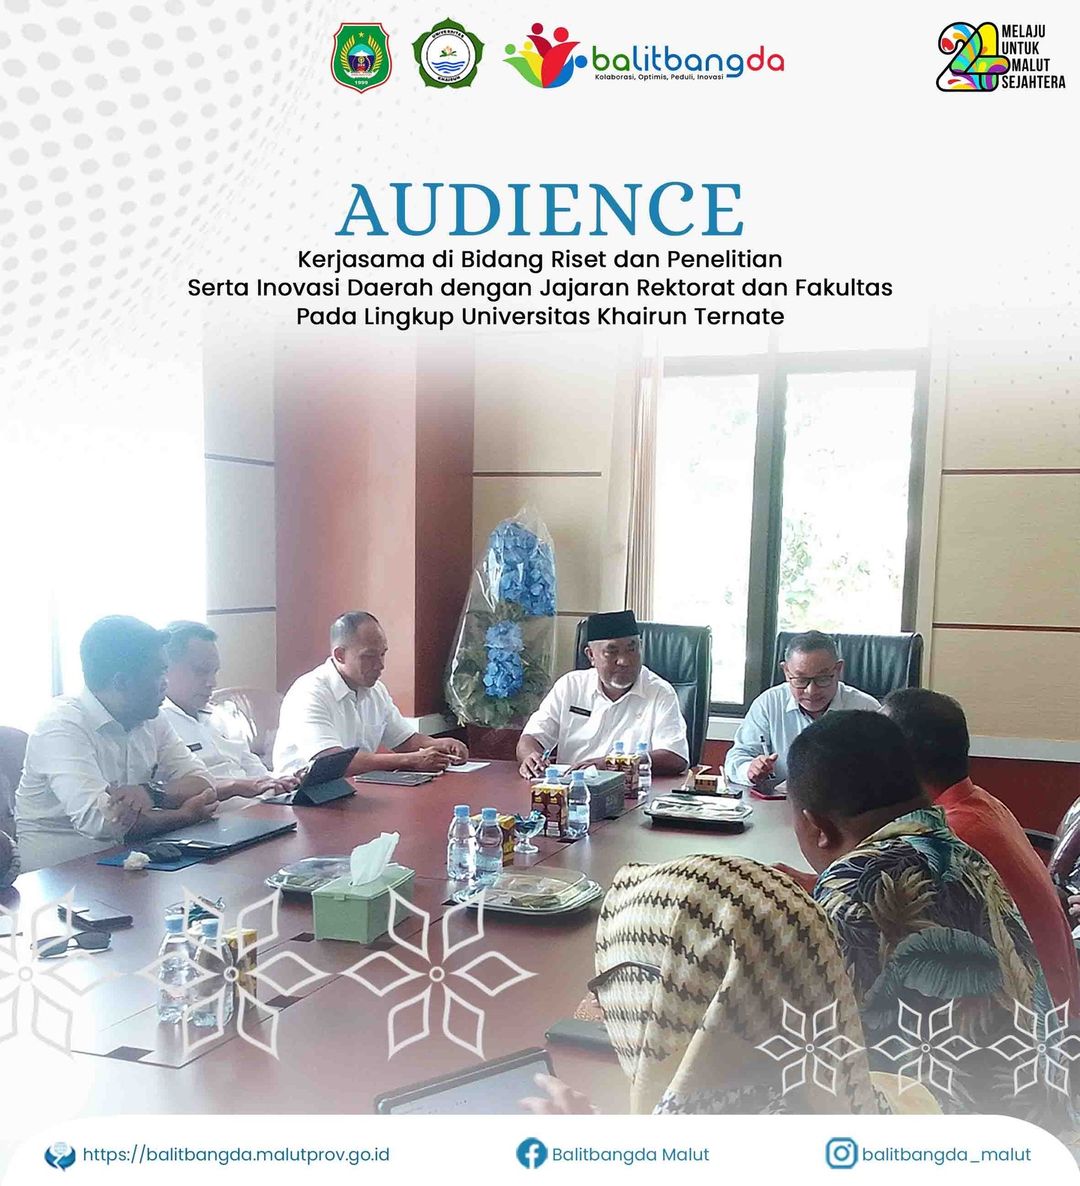 Audience Kerjasama di Bidang Riset dan Penelitian Serta Inovasi Daerah dengan Jajaran Rektorat dan Fakultas Pada Lingkup Universitas Khairun Ternate